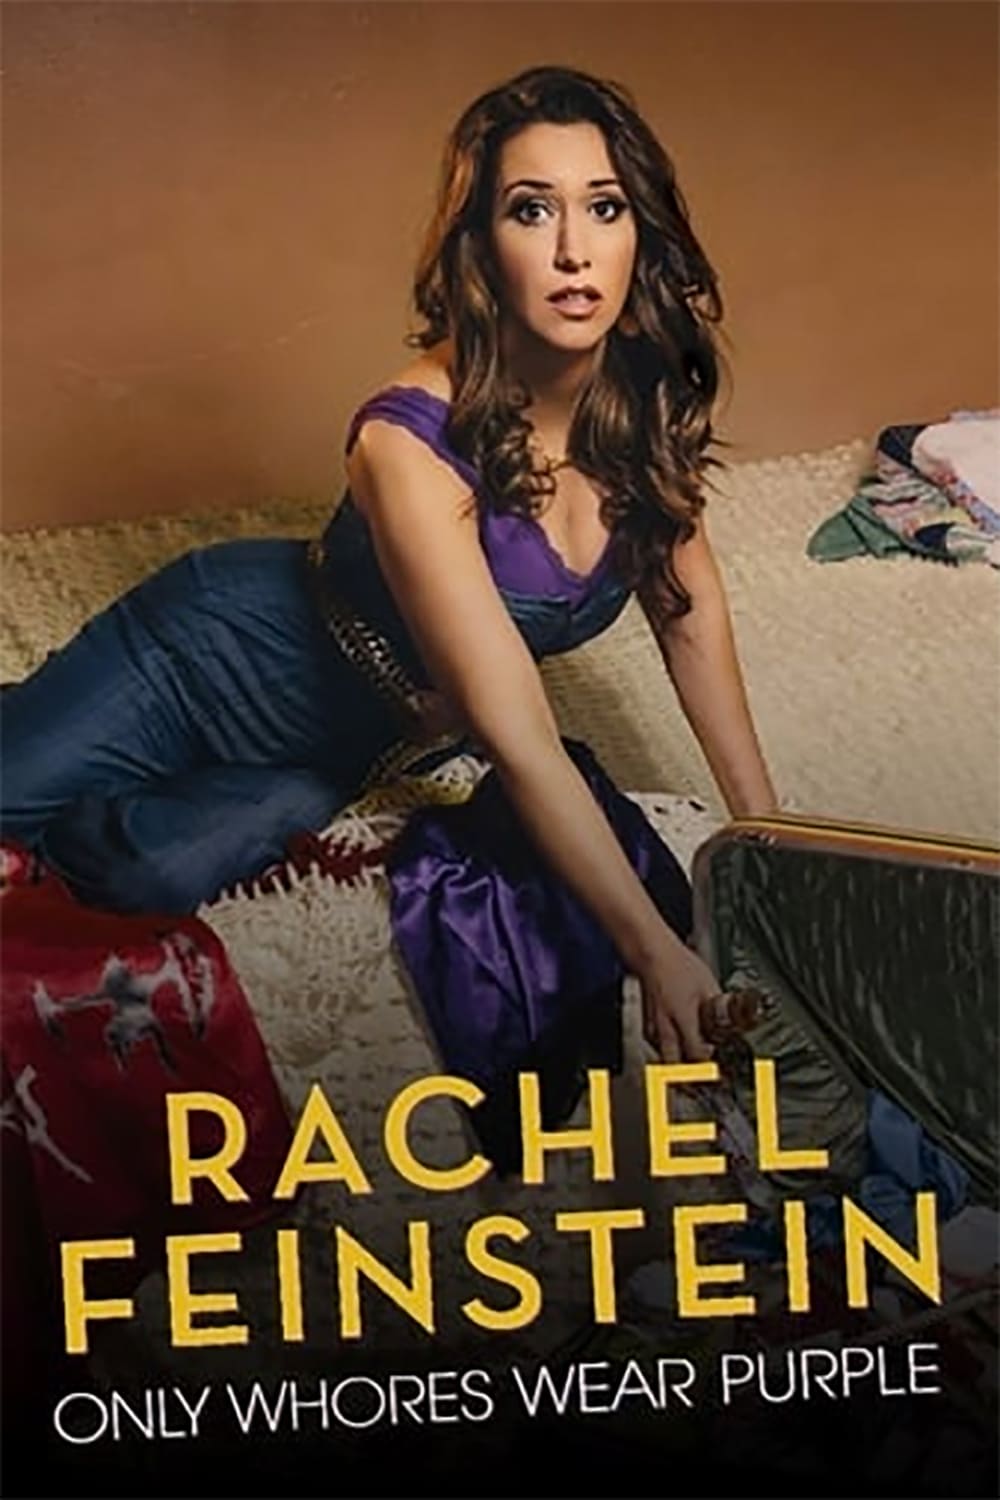 Caratula de AMY SCHUMER PRESENTS RACHEL FEINSTEIN ONLY WHORES WEAR PURPLE (Amy Schumer Presents Rachel Feinstein Only Whores Wear Purple) 